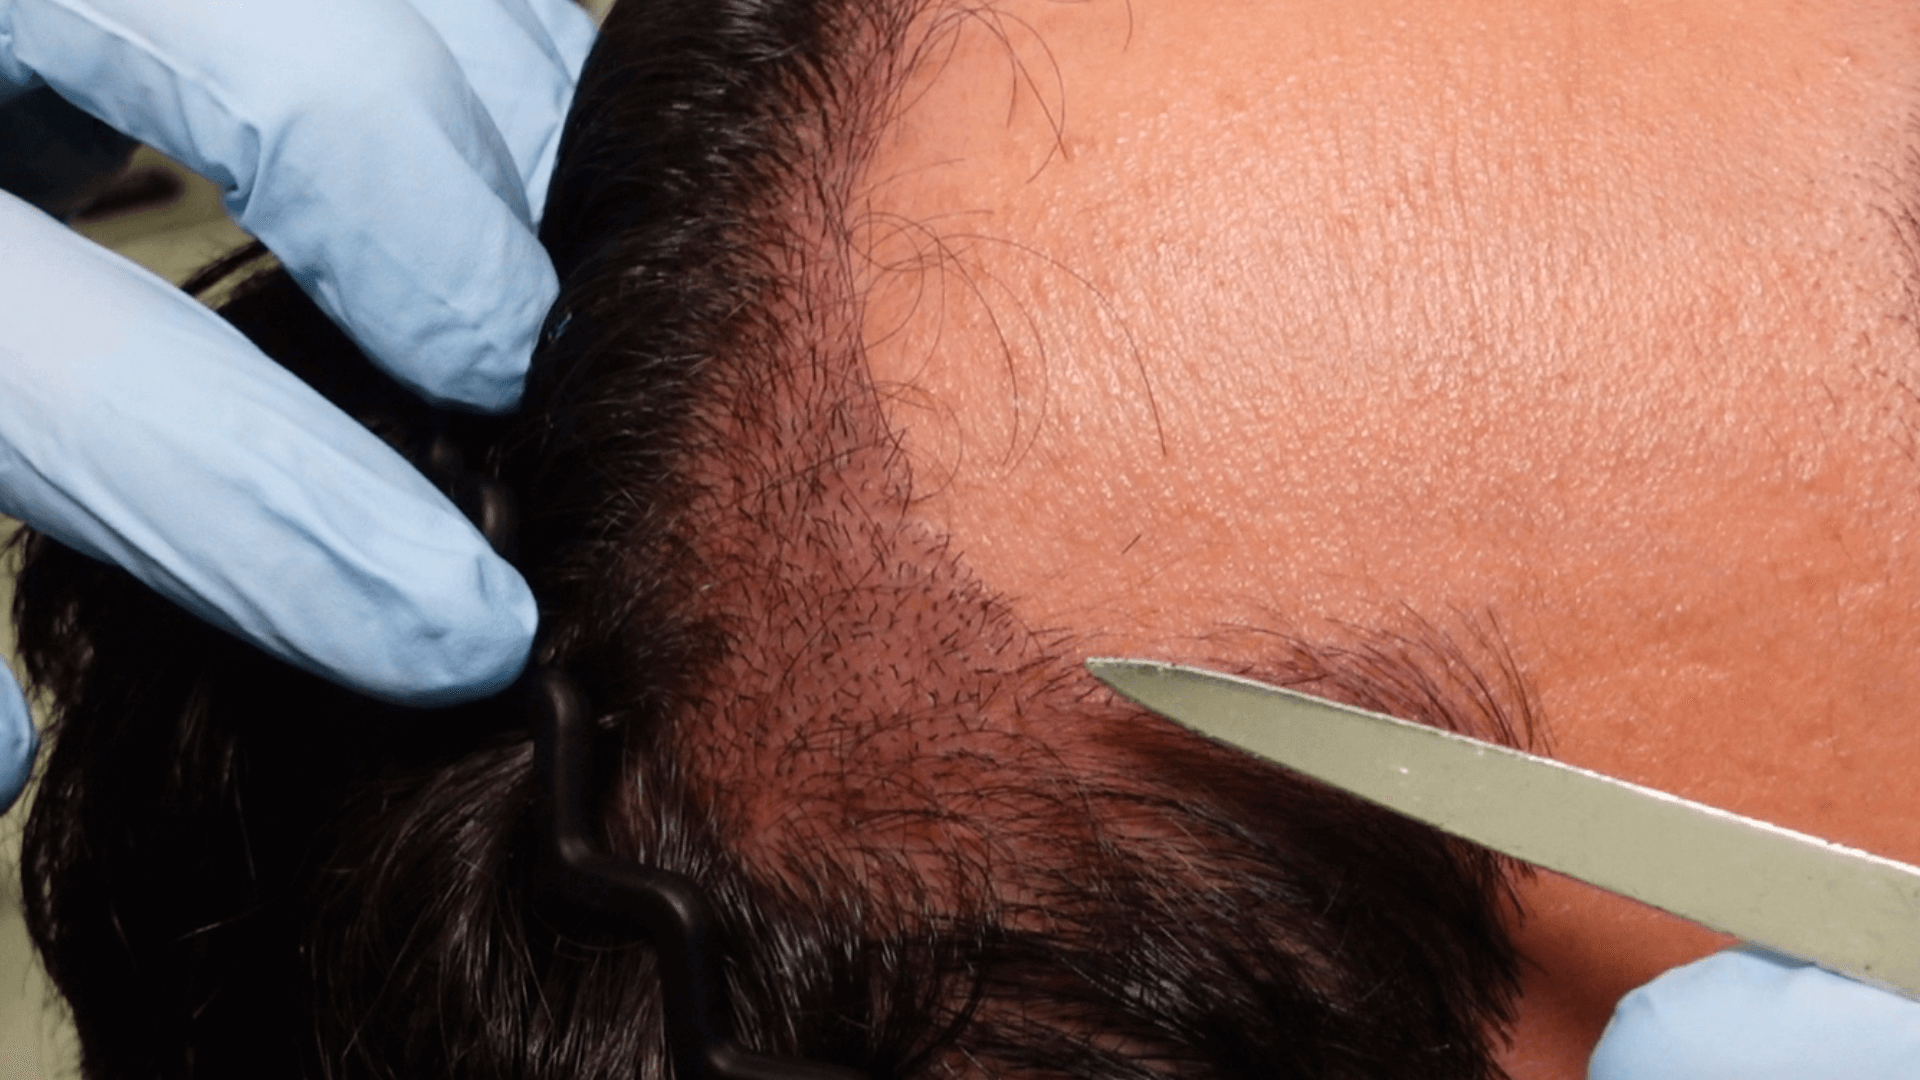 Planting grafts at the hair loss area